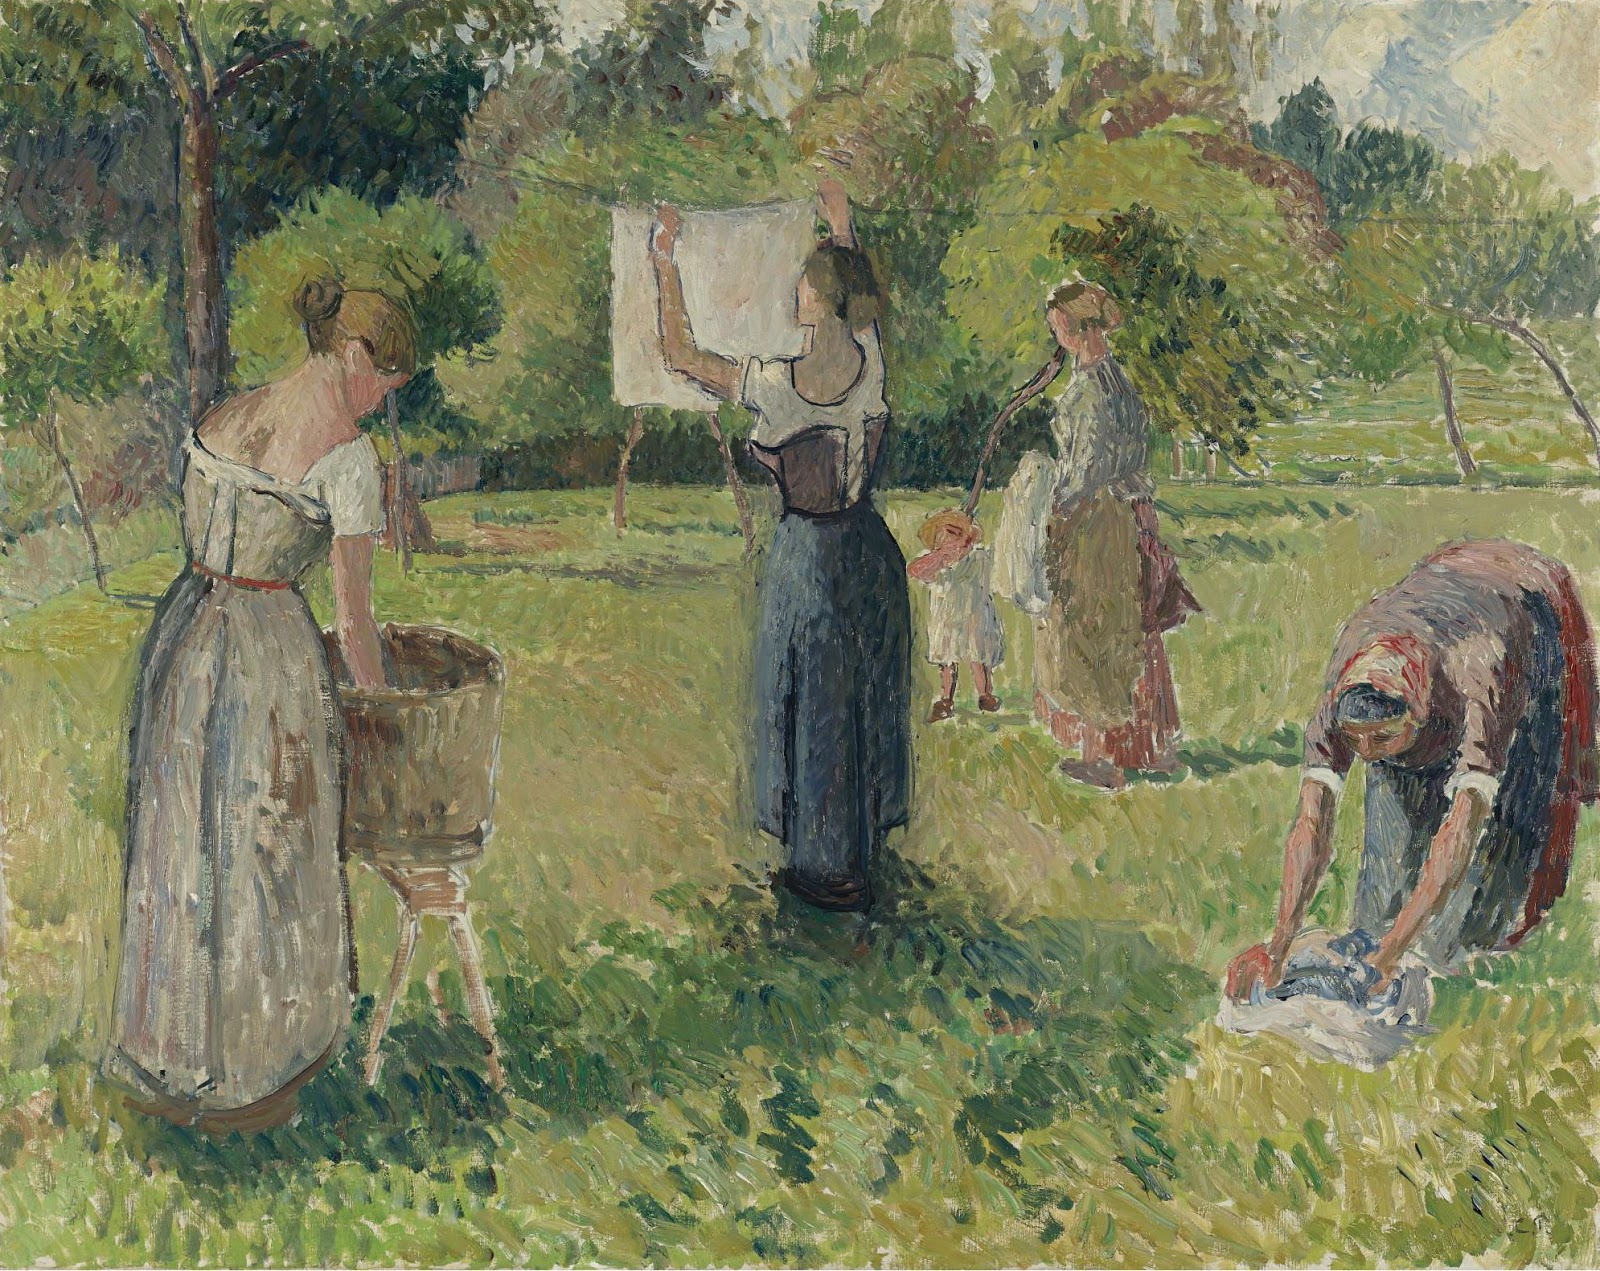 Camille+Pissarro-1830-1903 (388).jpg